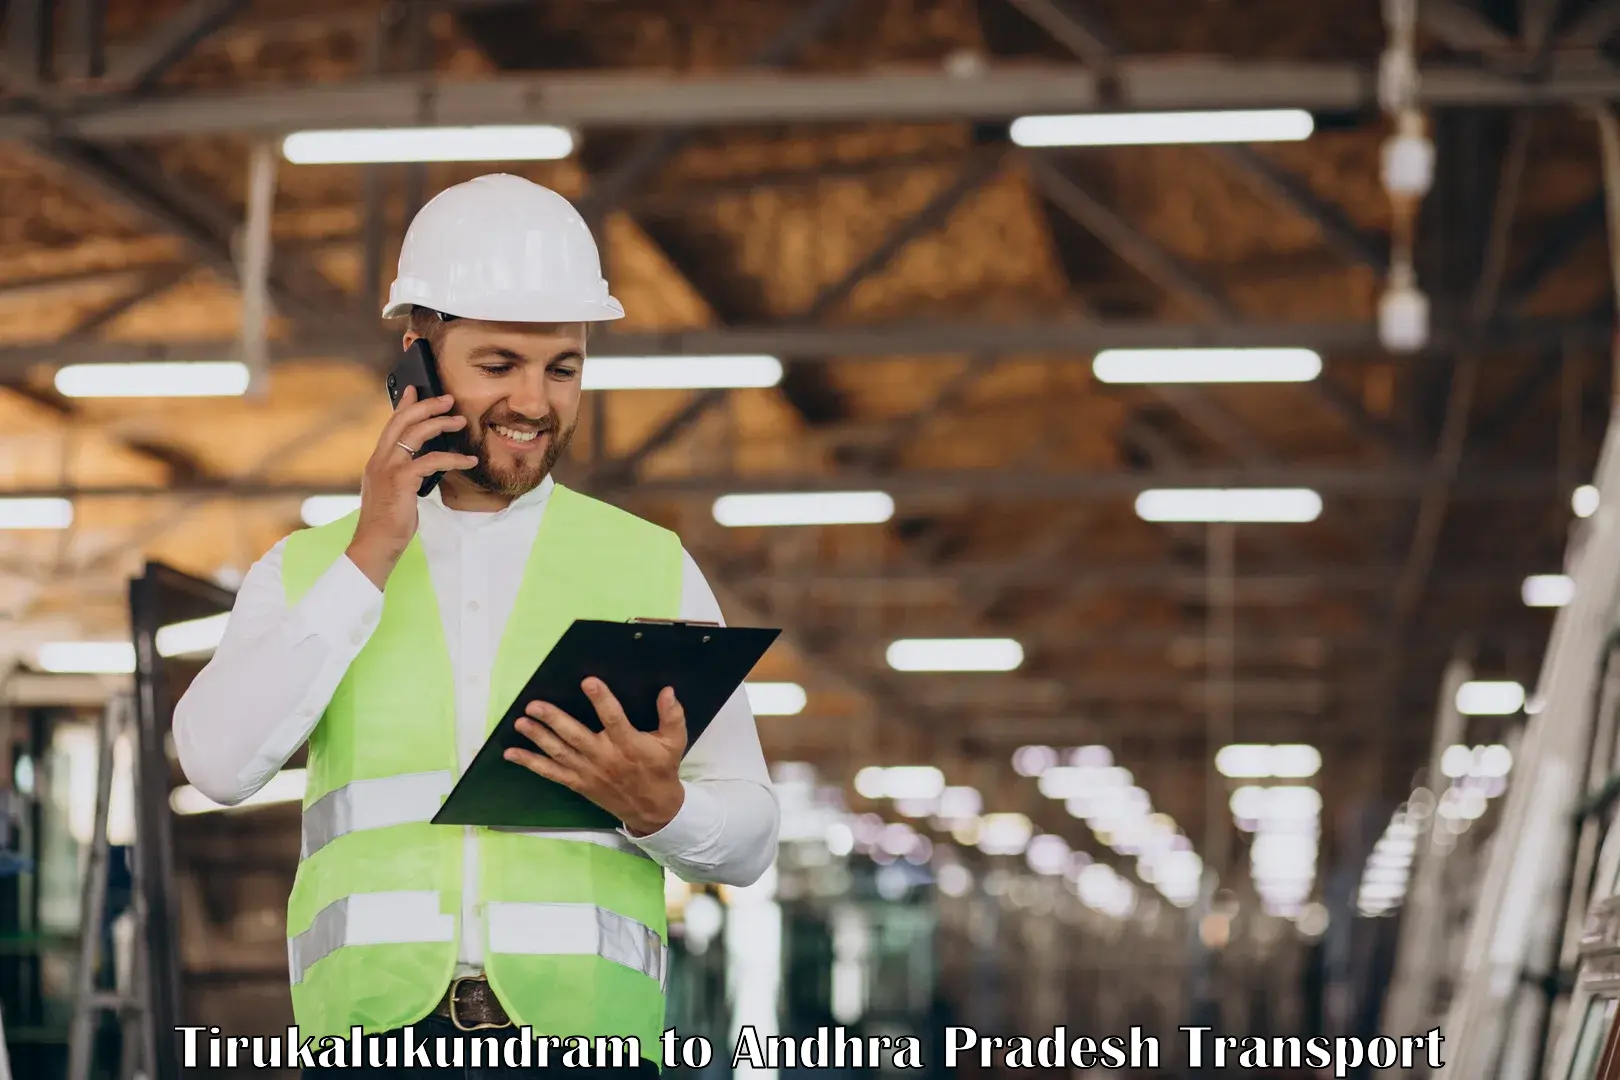 Nearest transport service in Tirukalukundram to Andhra Pradesh